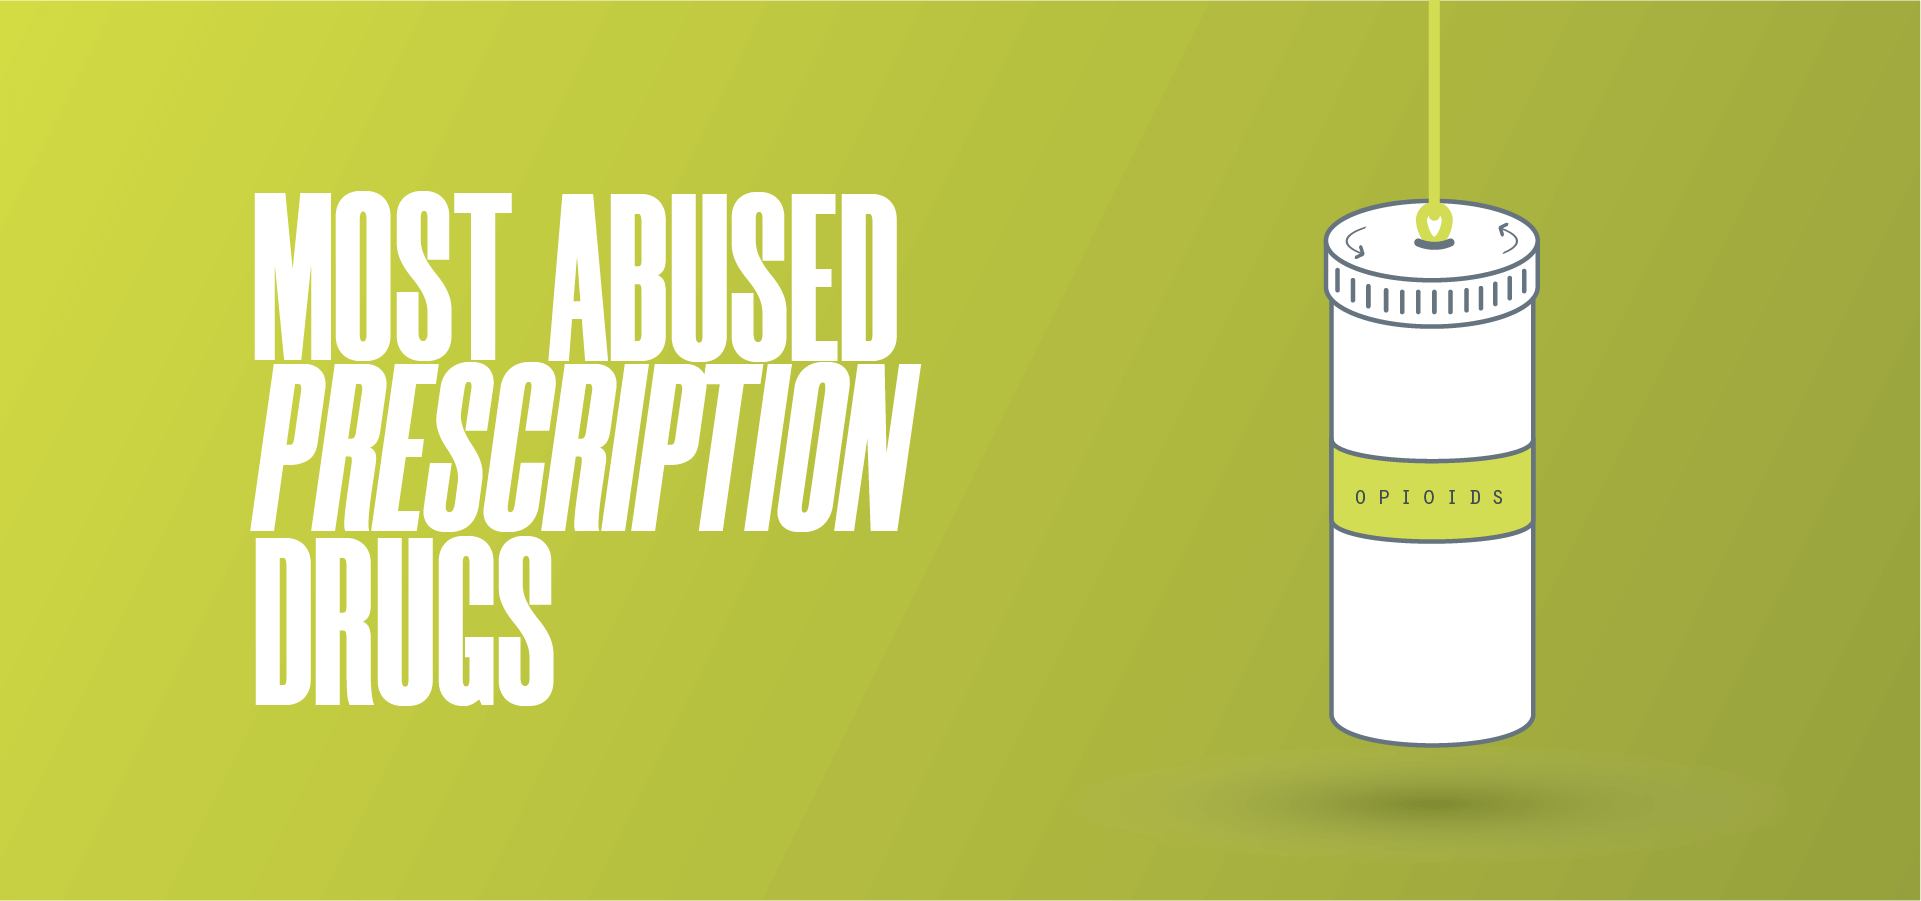 Prescription Drug Abuse and Addiction